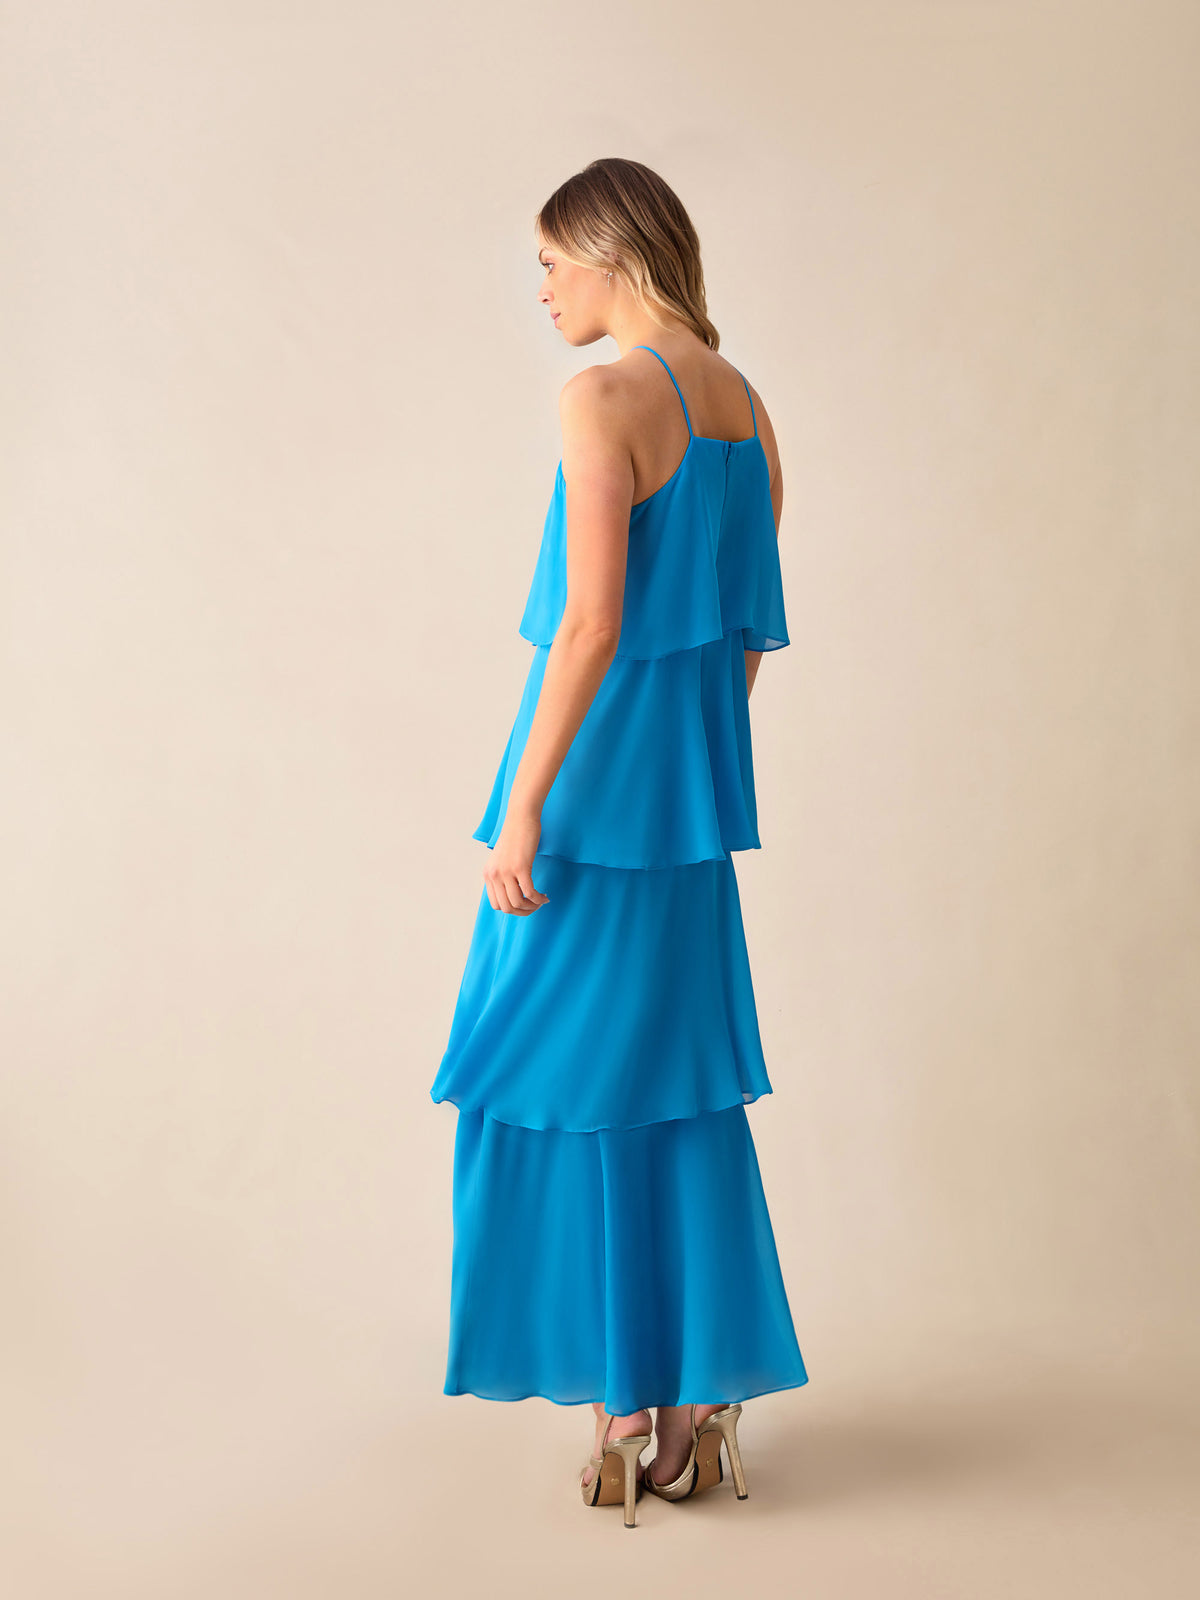 Savannah Blue Chiffon Tiered Maxi Dress